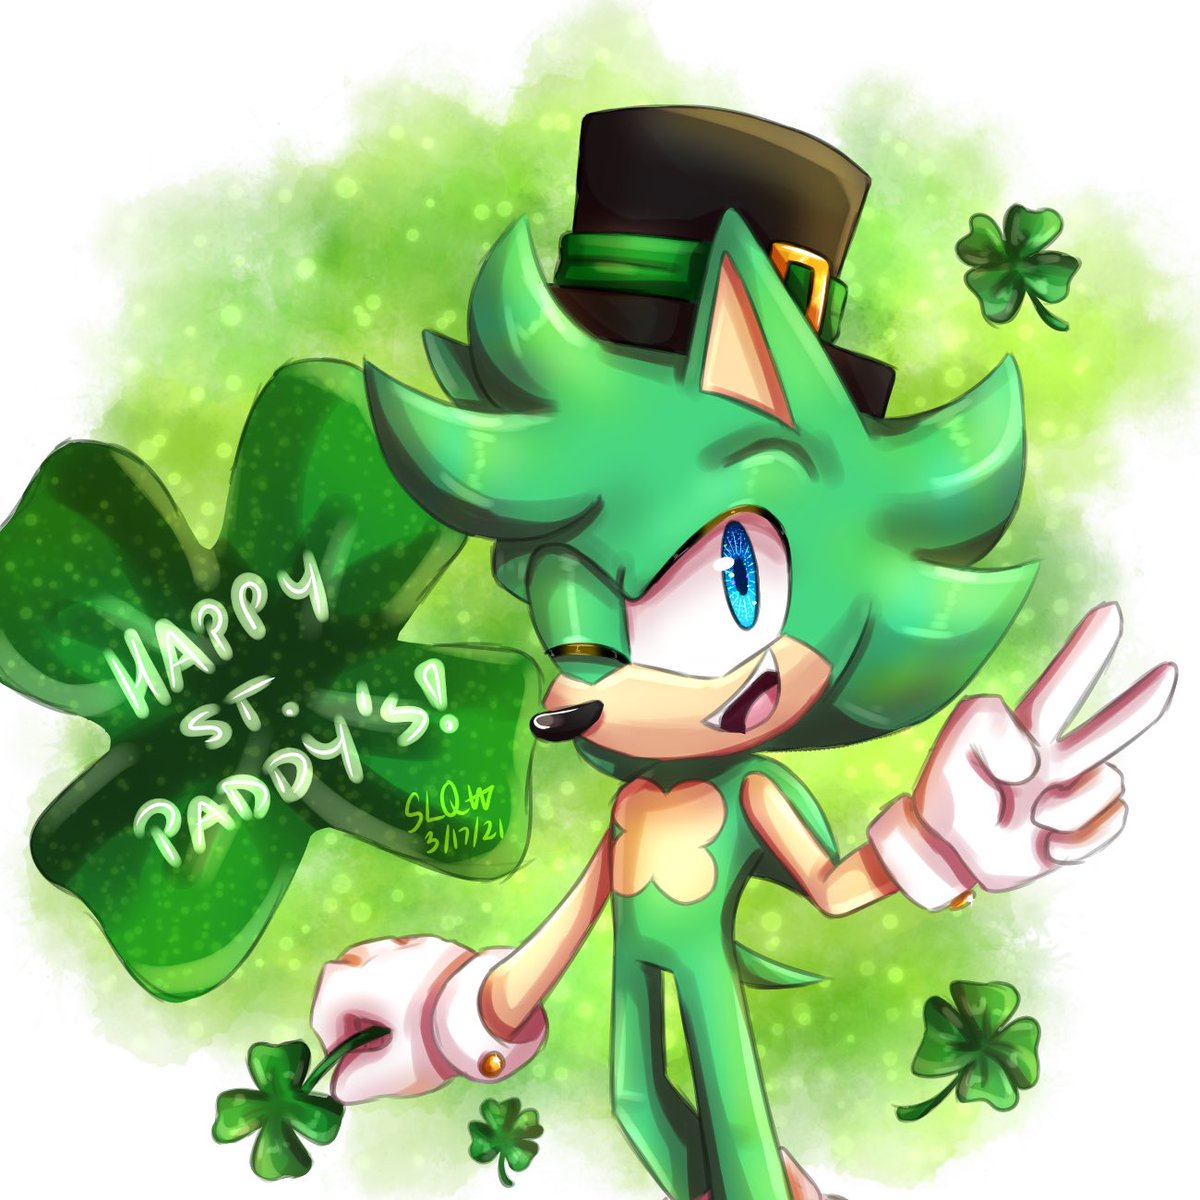 Happy St. Paddy’s!! 🍀

#irishthehedgehog